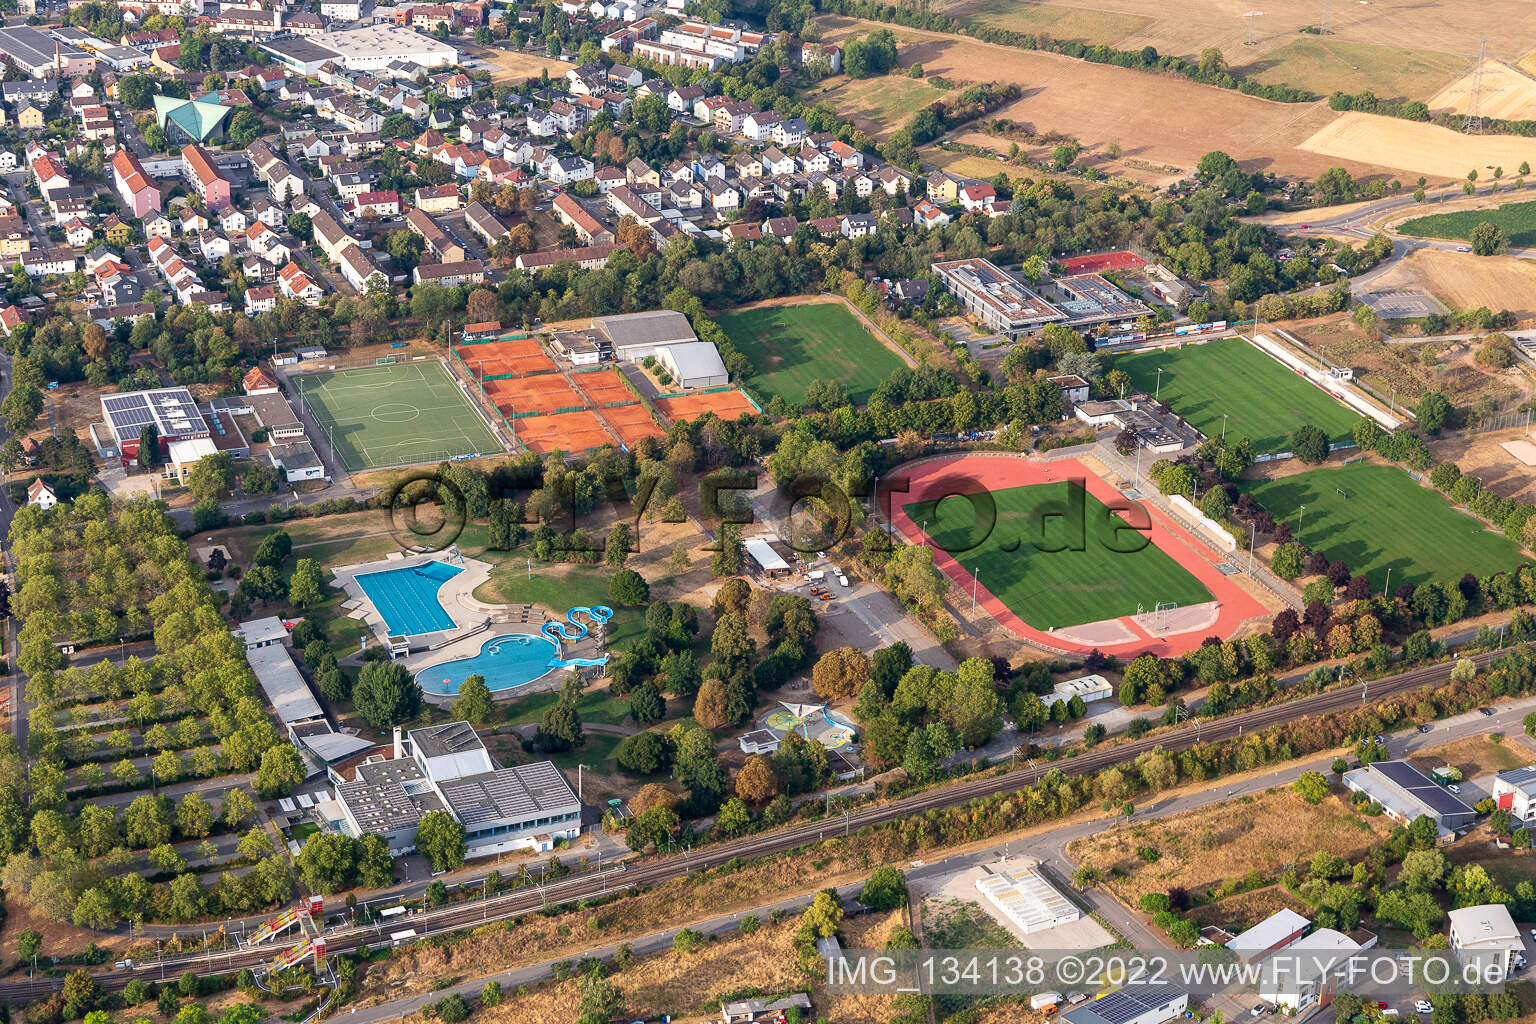 Sports center, TSG Bruchsal 1846 eV in Bruchsal in the state Baden-Wuerttemberg, Germany